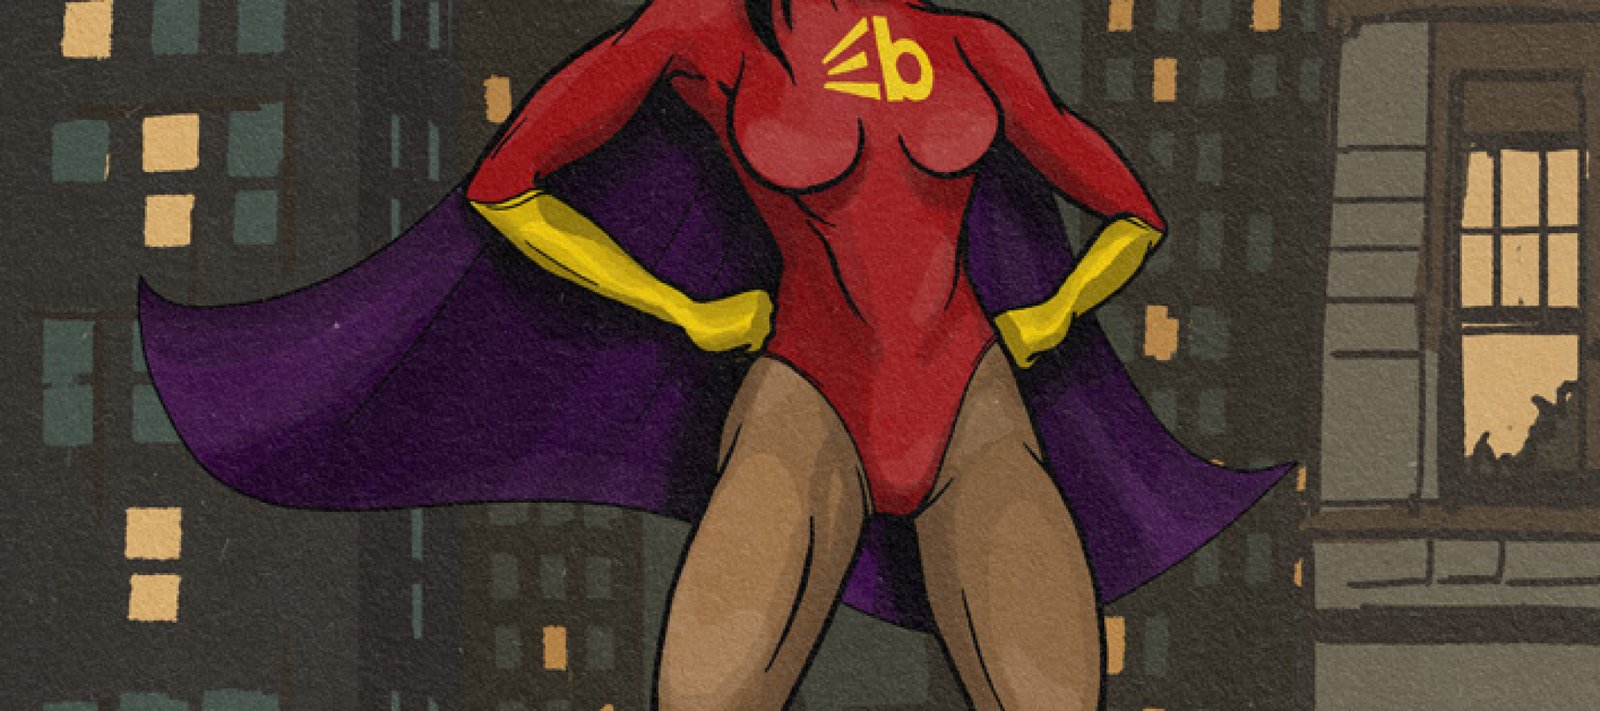 Naomi Campbell Superhero Character